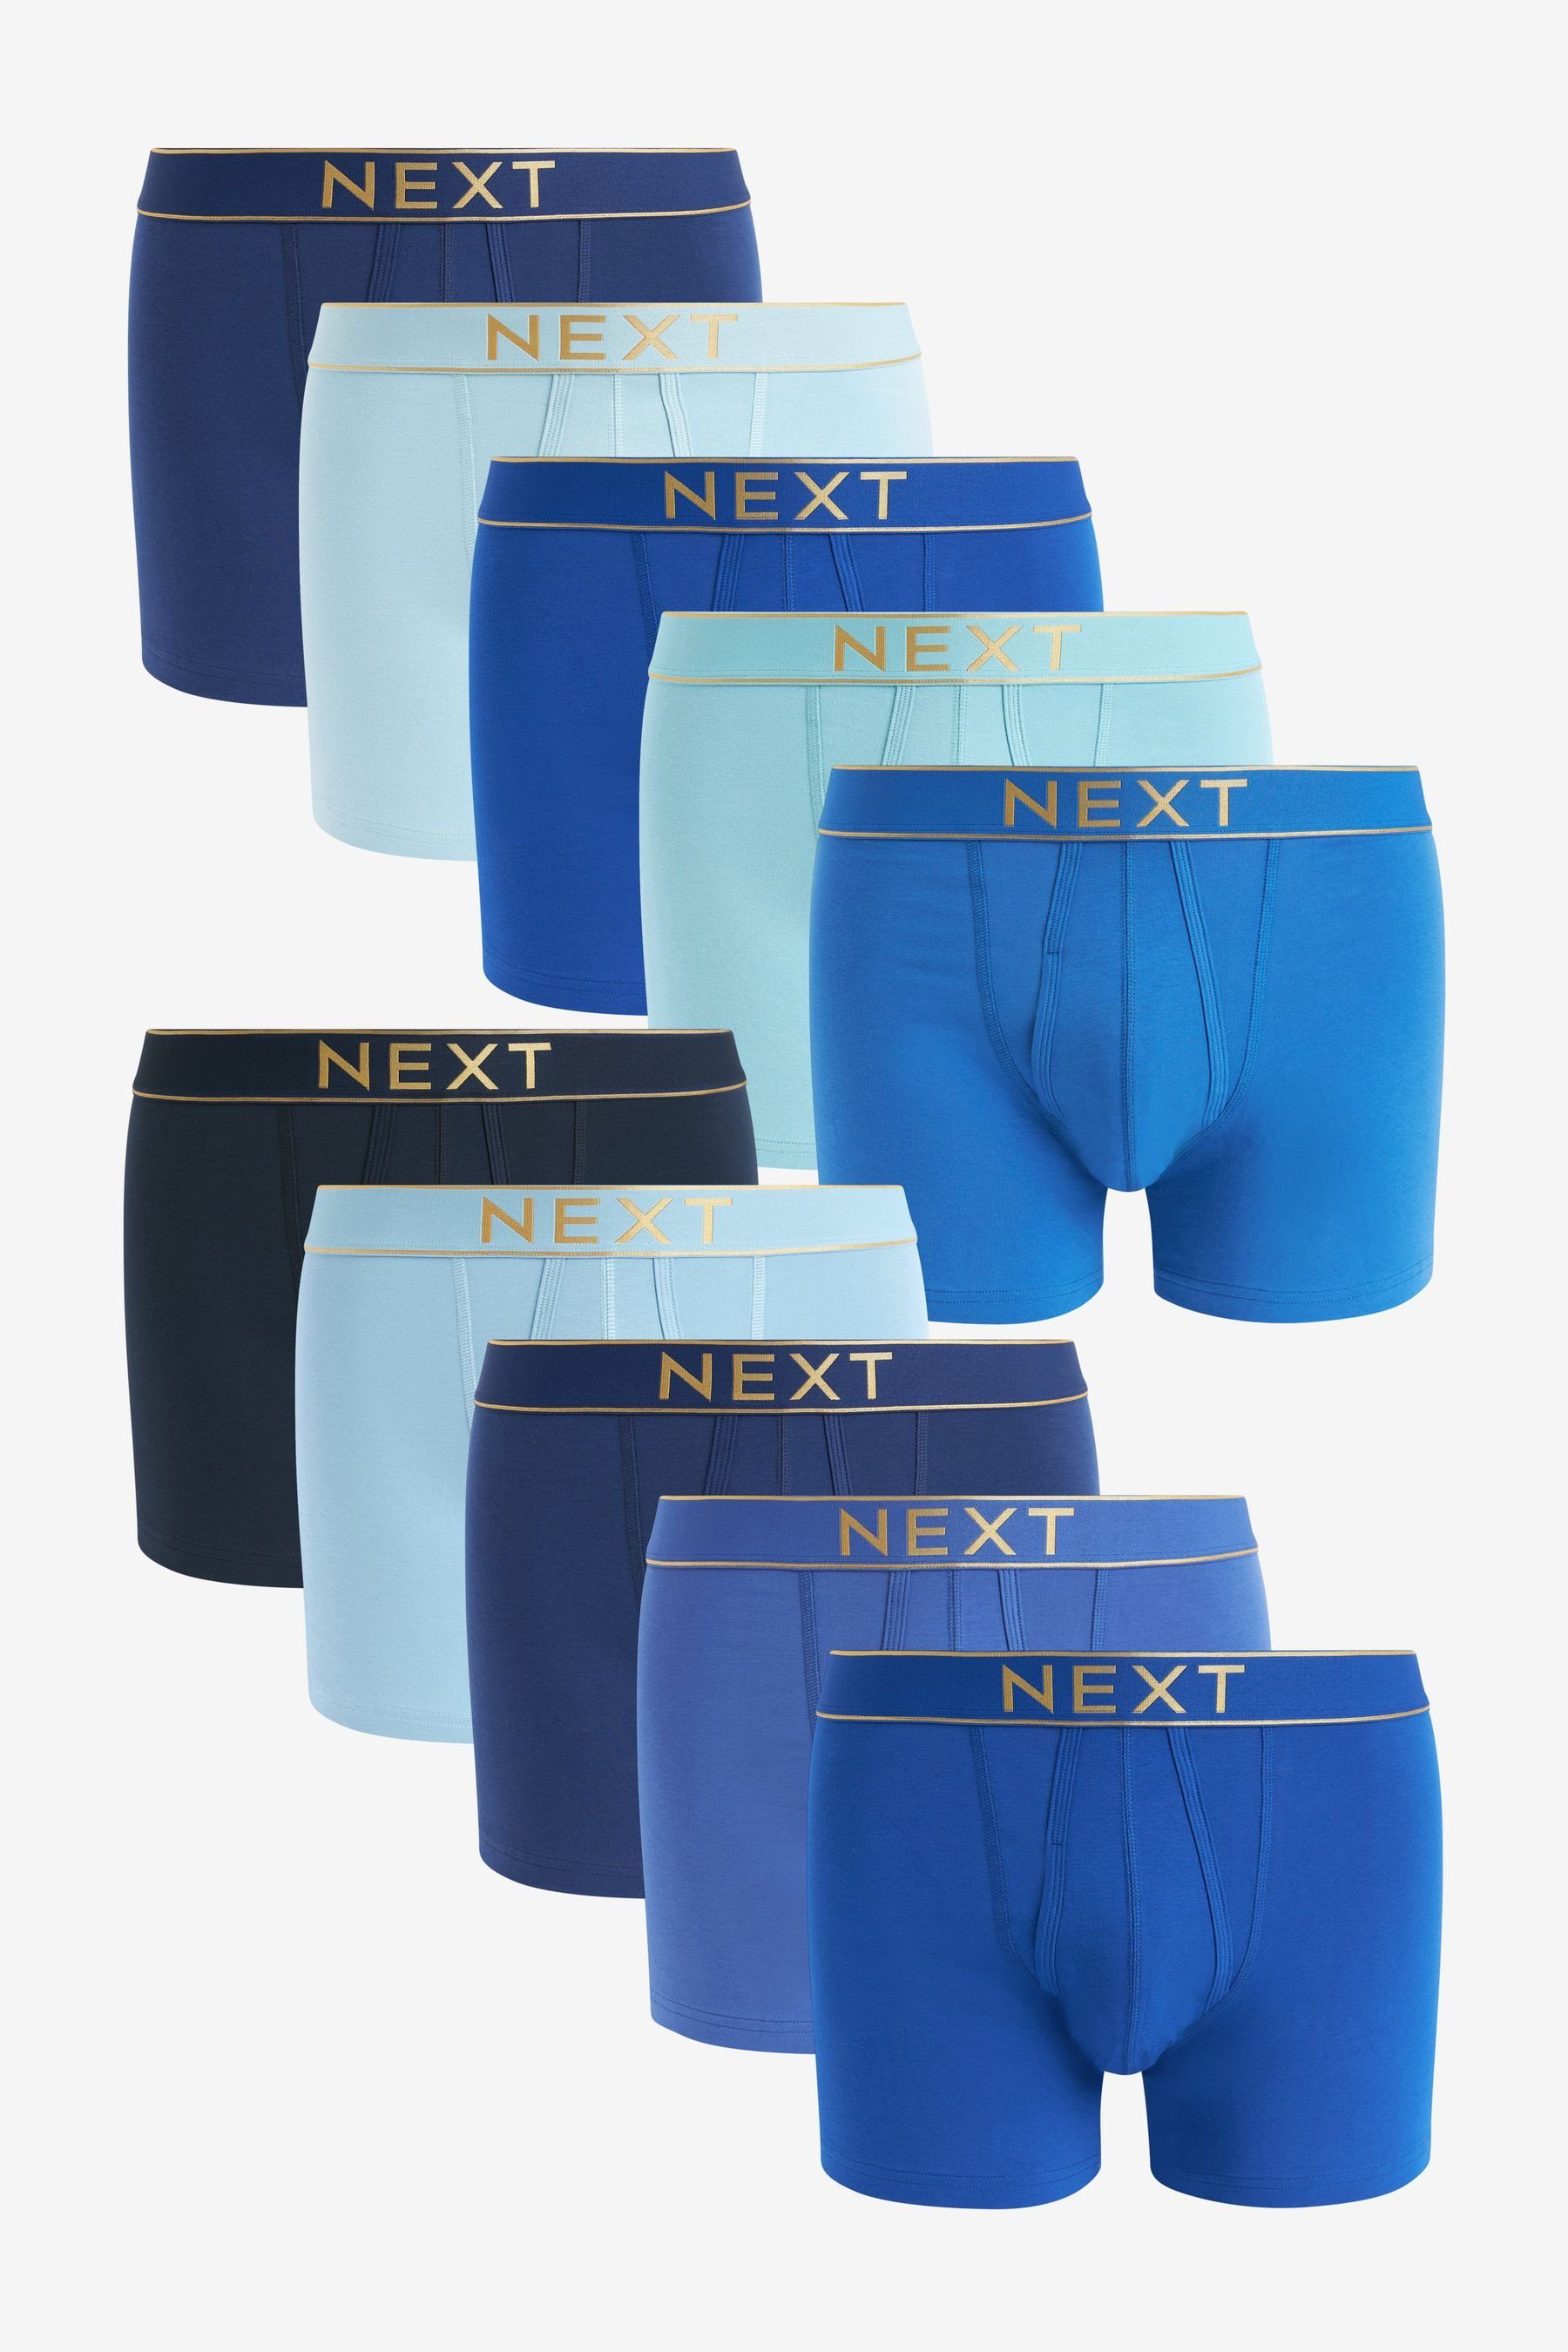 Next Boxershorts Boxershorts mit Eingriff, 10er-Pack (10-St) Blue Gold Waistband